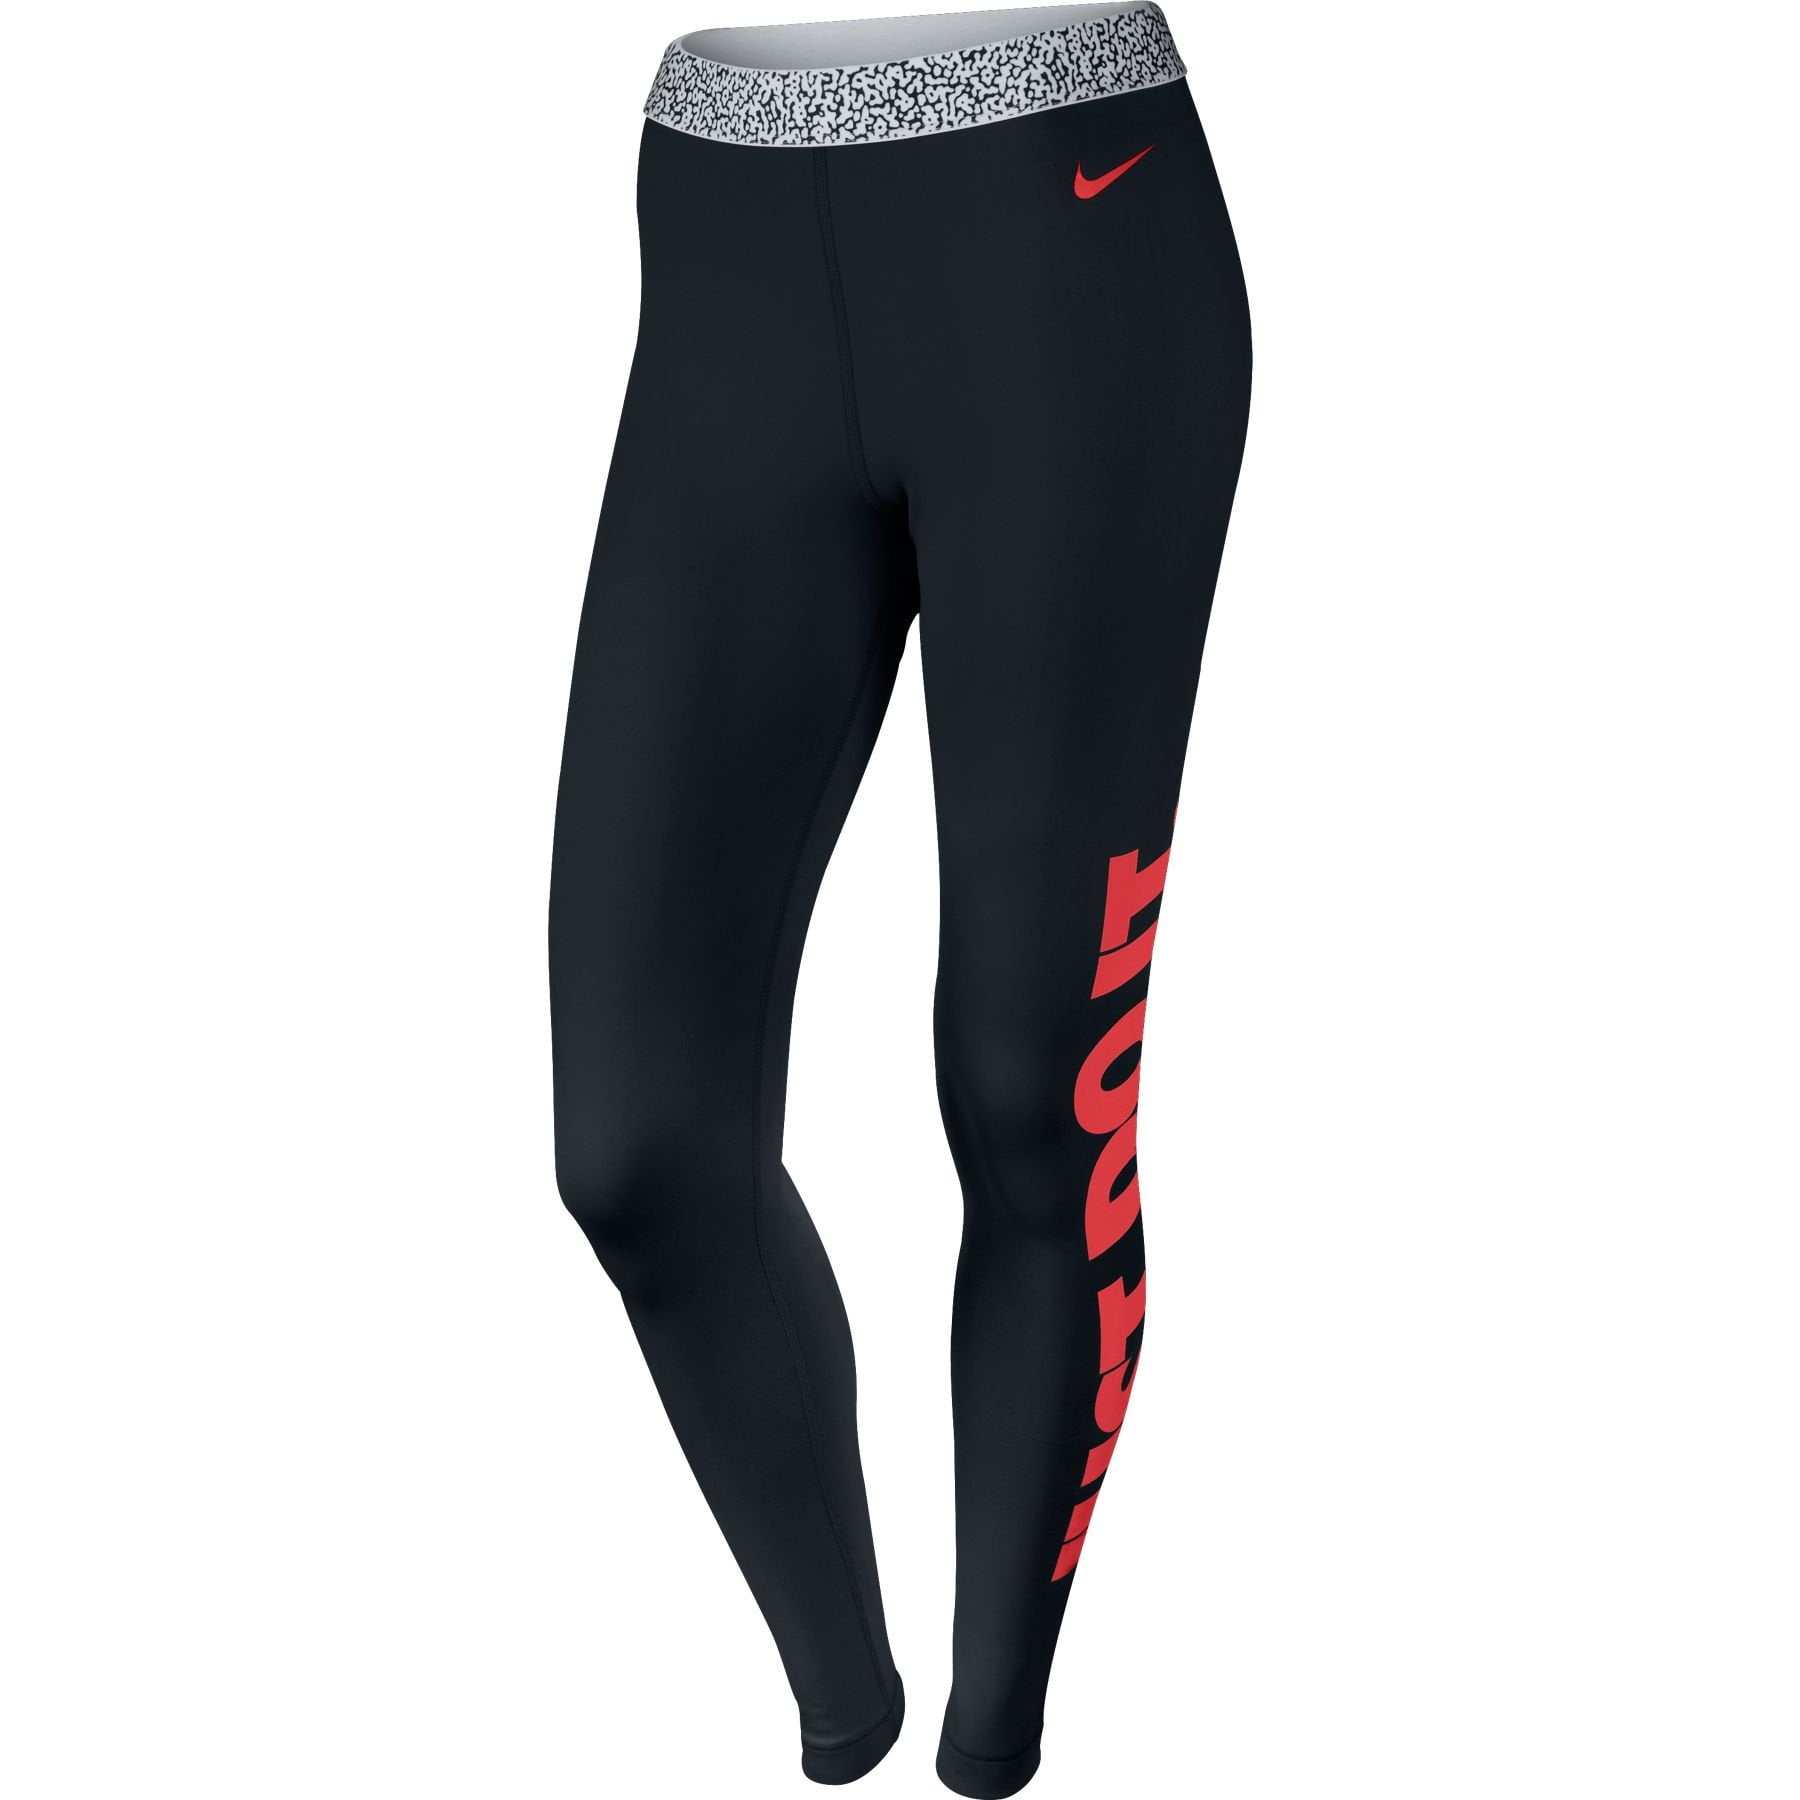 Nike Women's Pro Warm Mezzo Waistband Tights (Black/Red/White, X-Small)